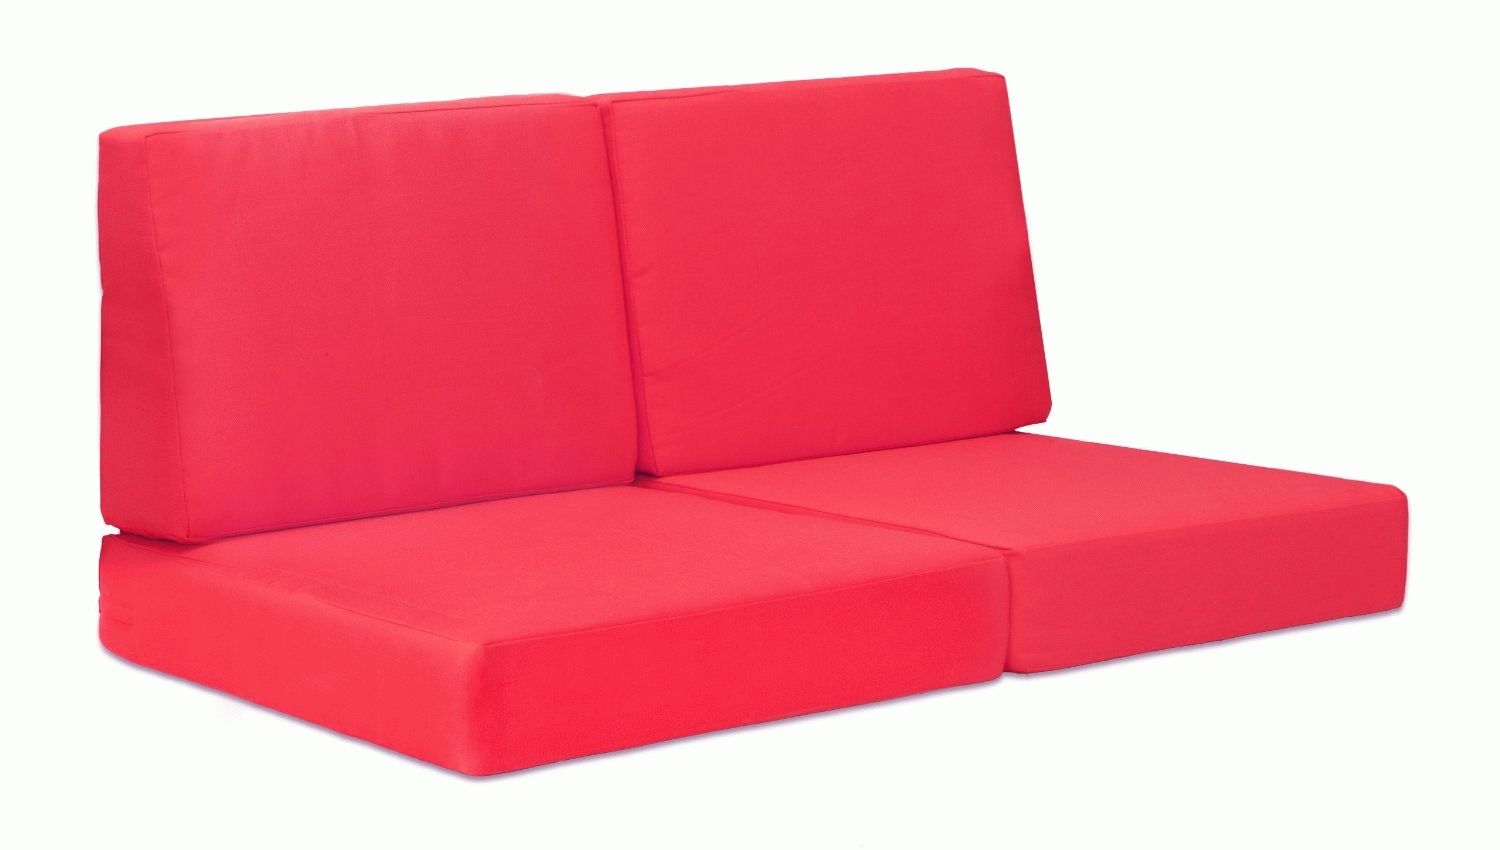 Cosmopolitan|sofa Cushions Intended For Sofa Cushions (View 2 of 30)